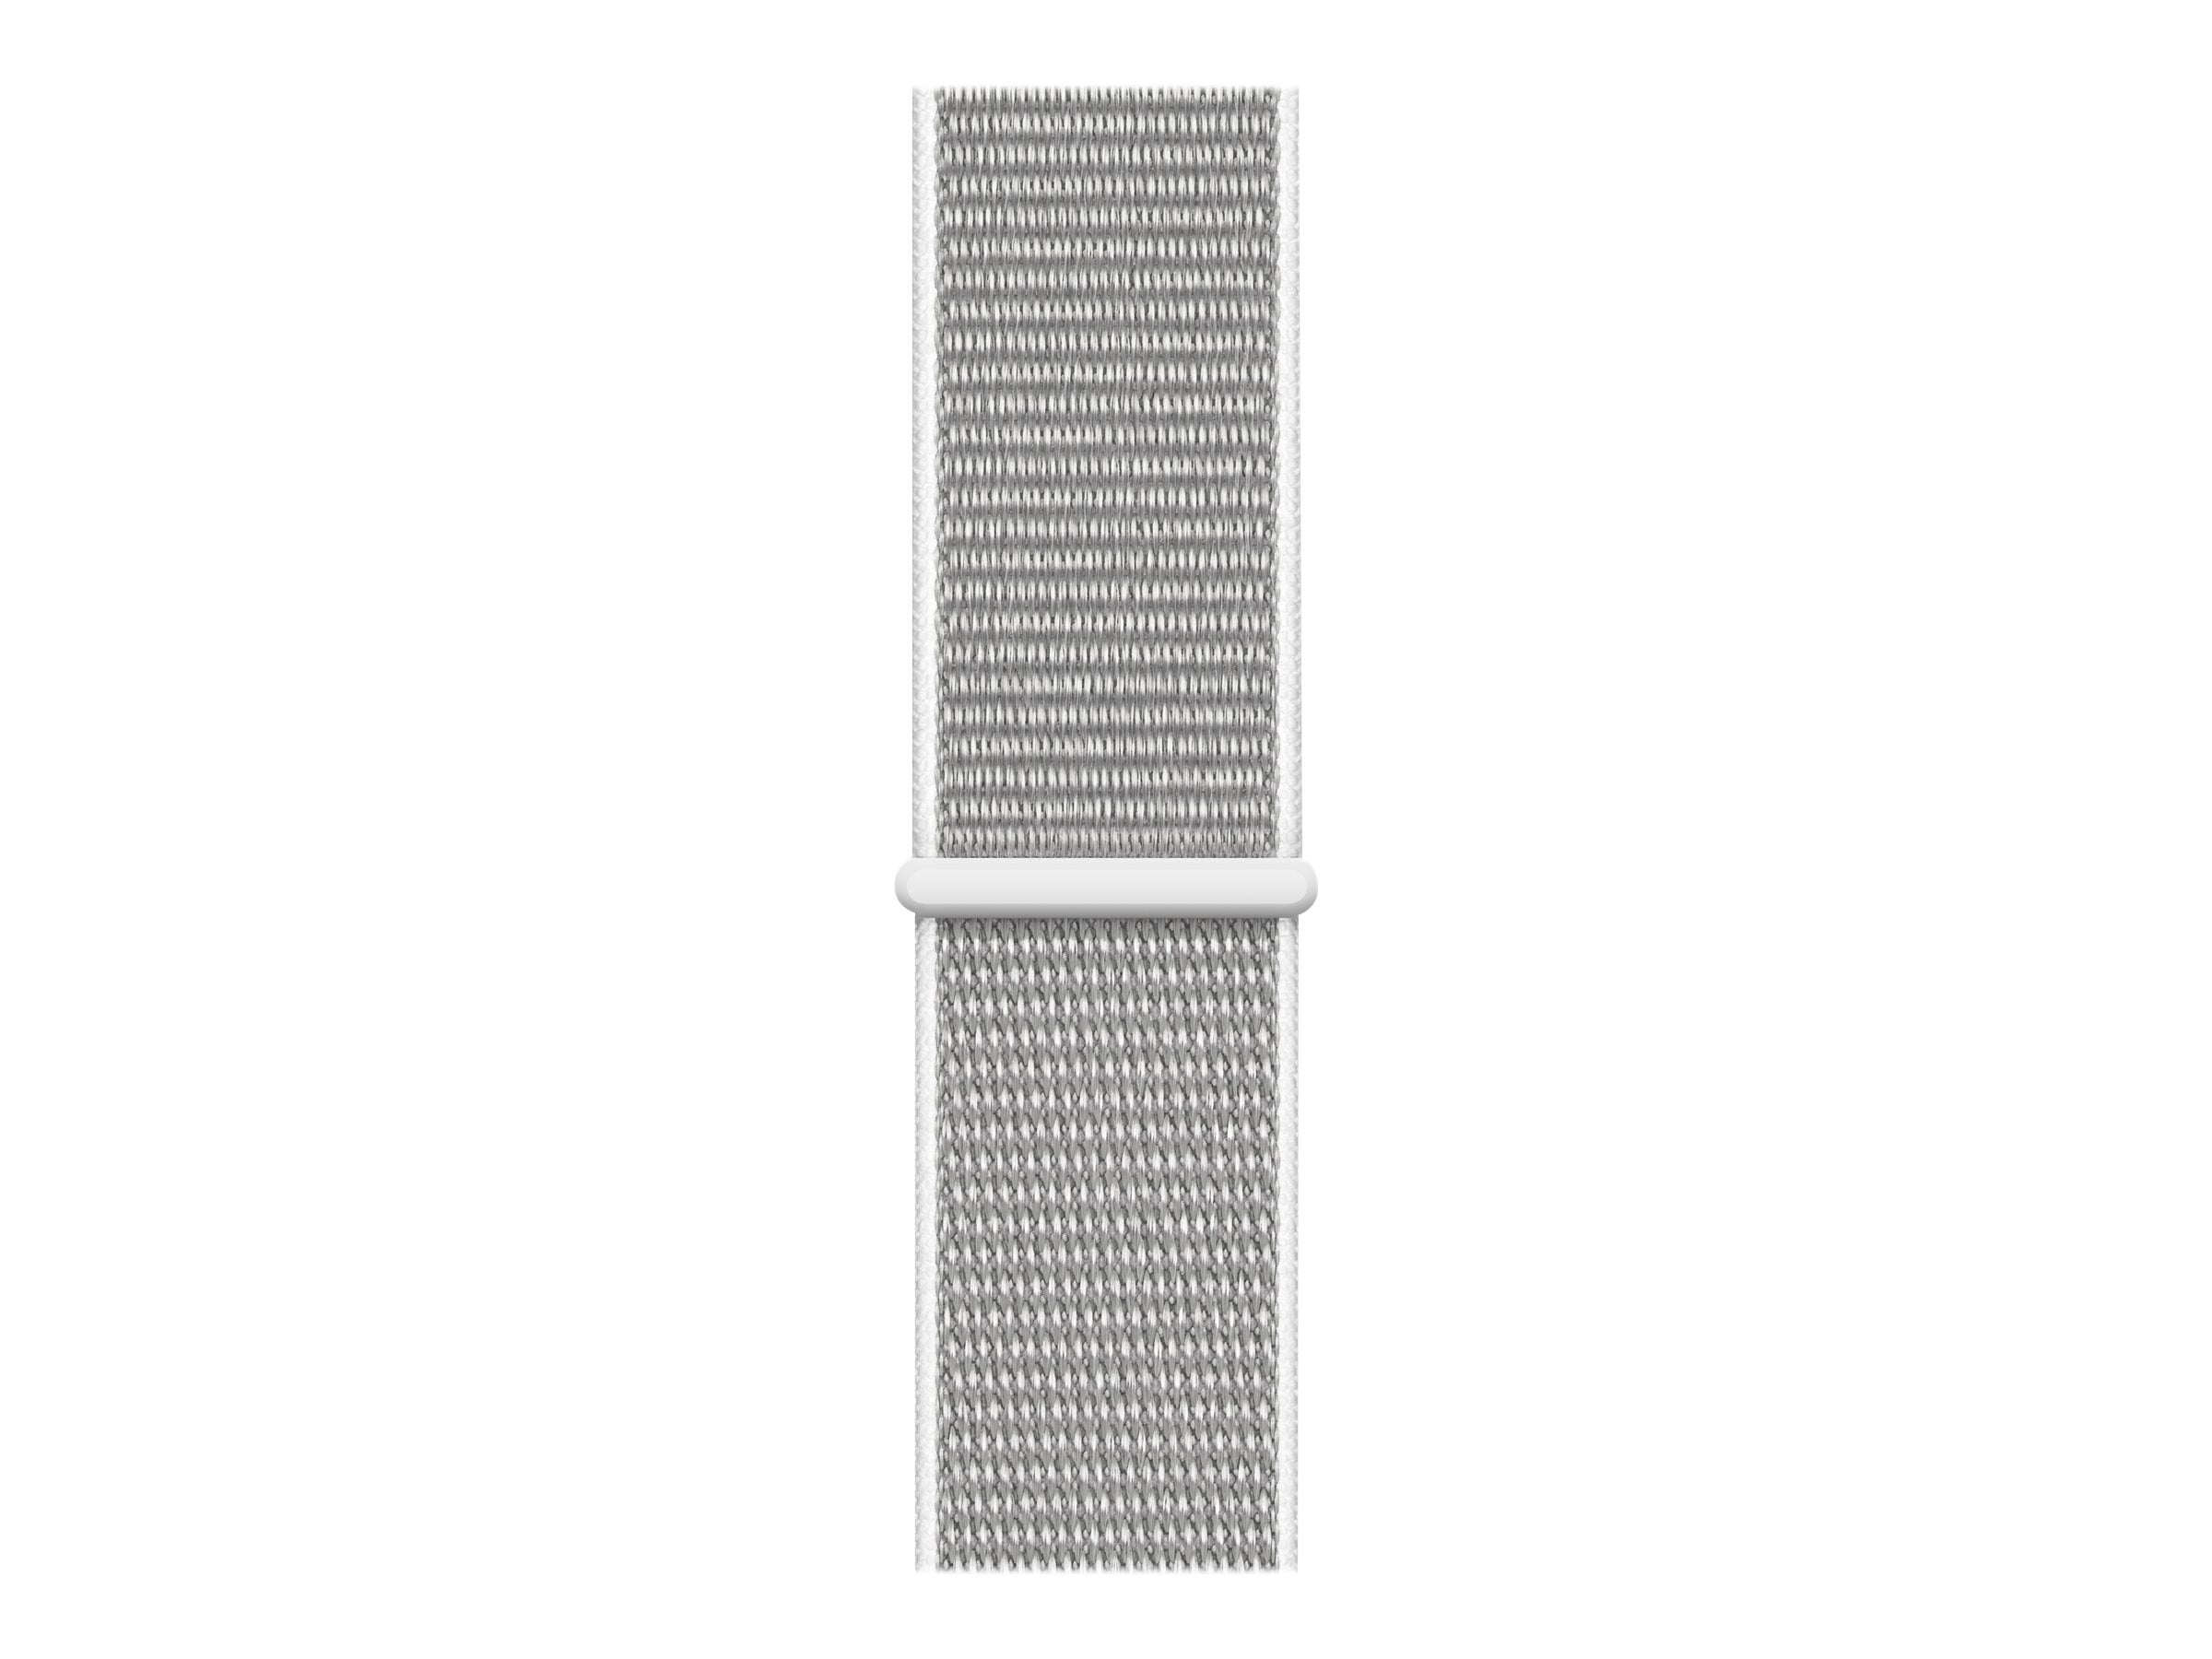 Smart Watches APPLE MQFK3_ELL - 906.00€